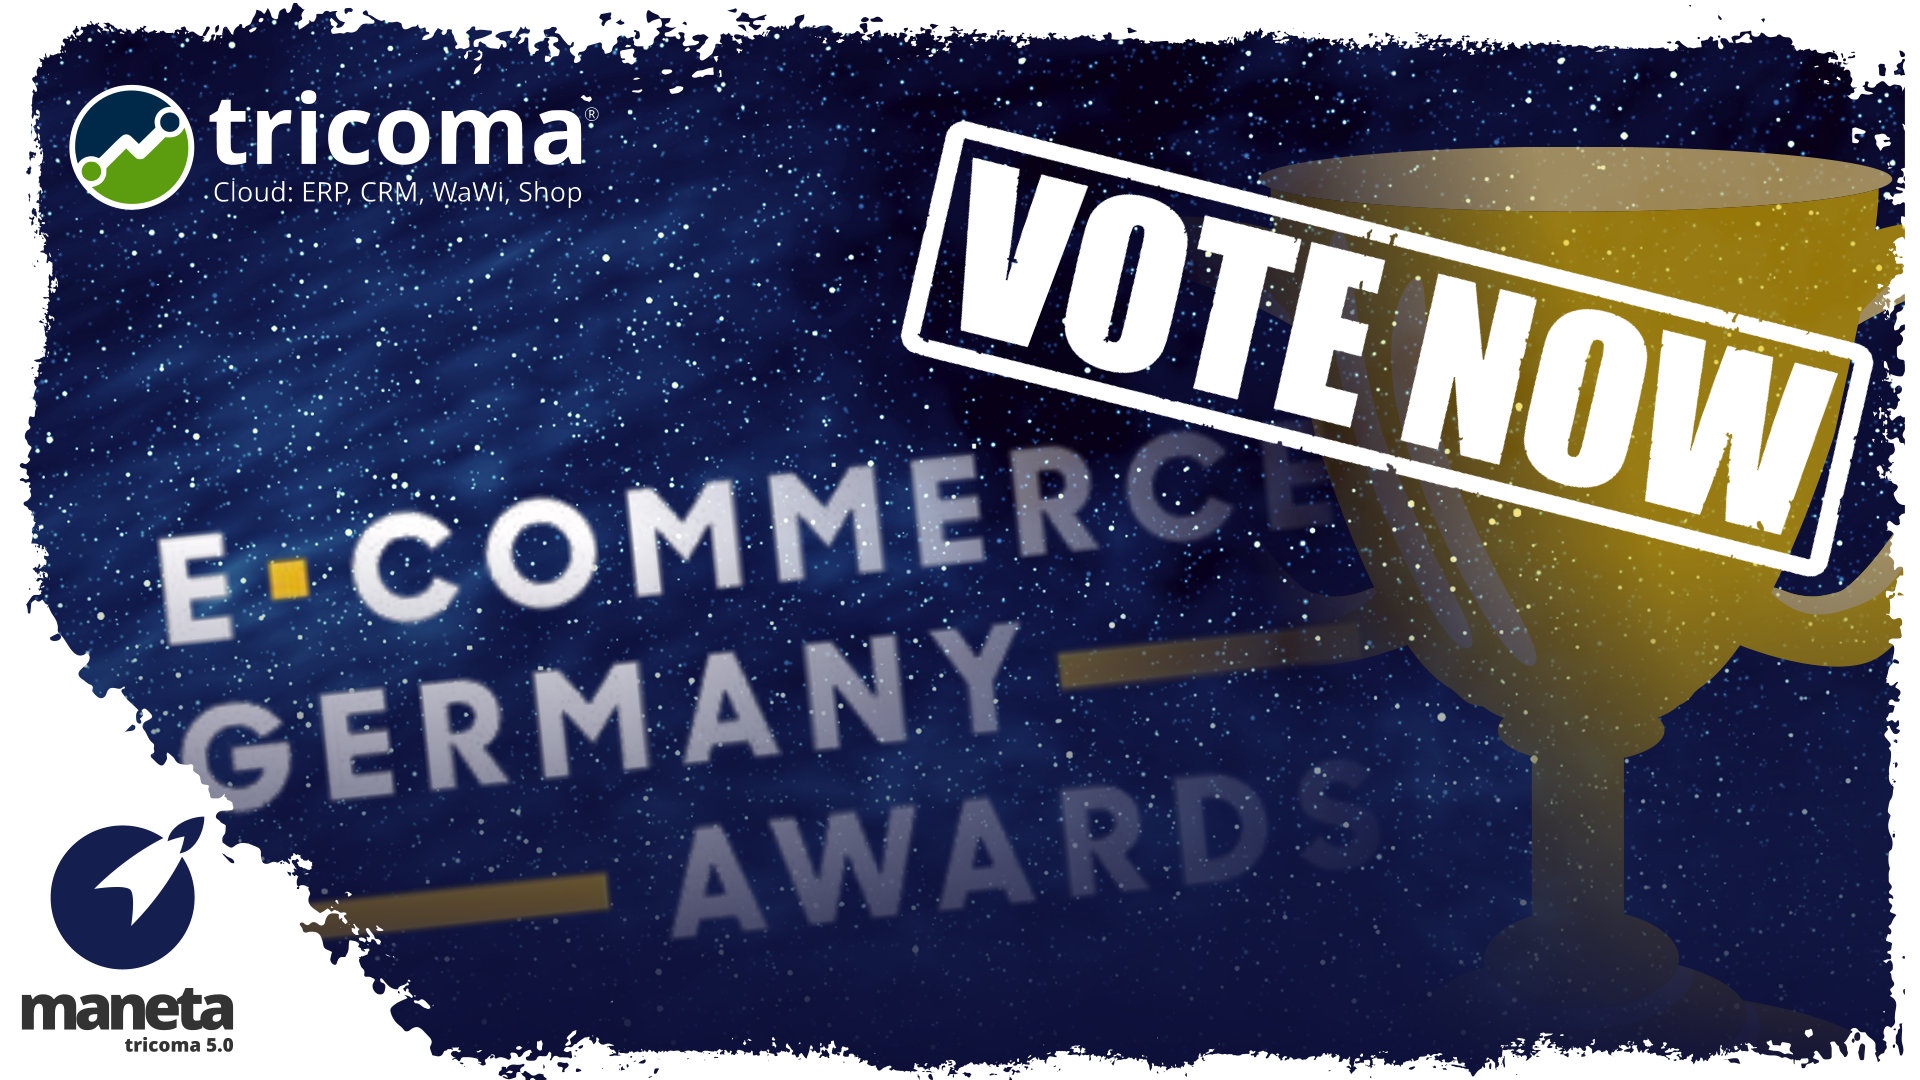 Jetzt für tricoma voten! E-Commerce Germany Awards 2023